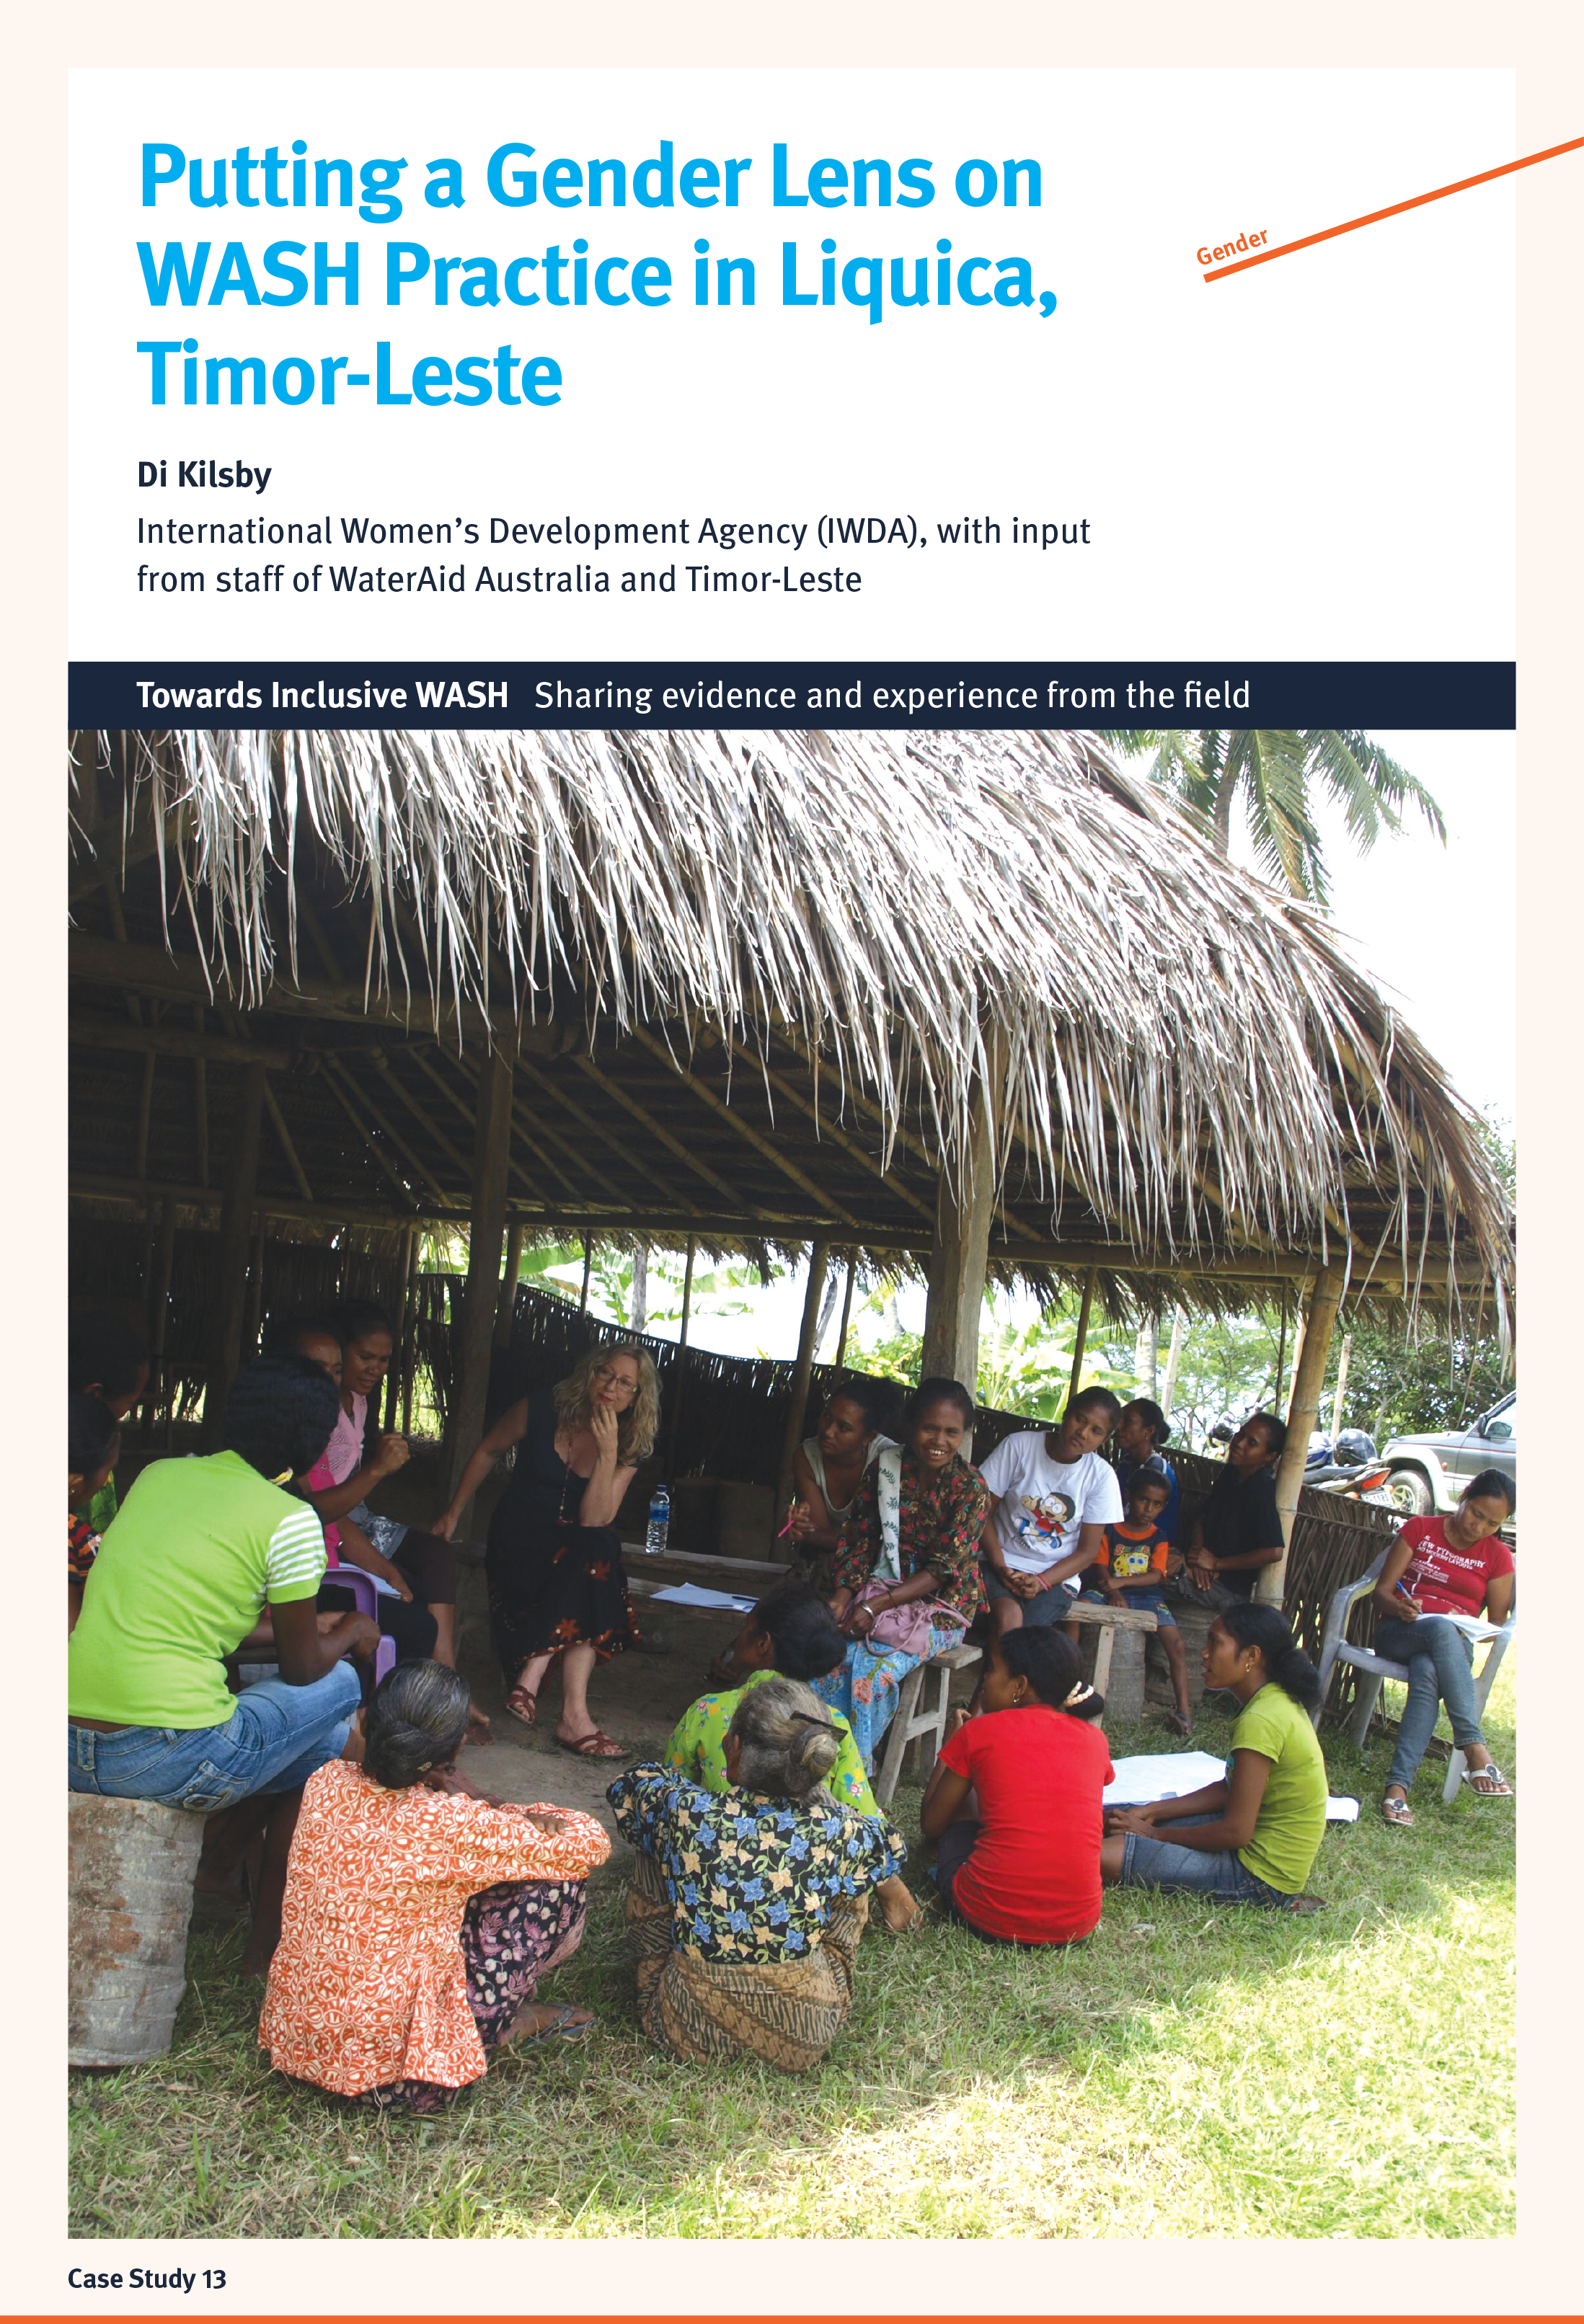 Putting a gender lens on WASH practice in Liquica, Timor-Leste